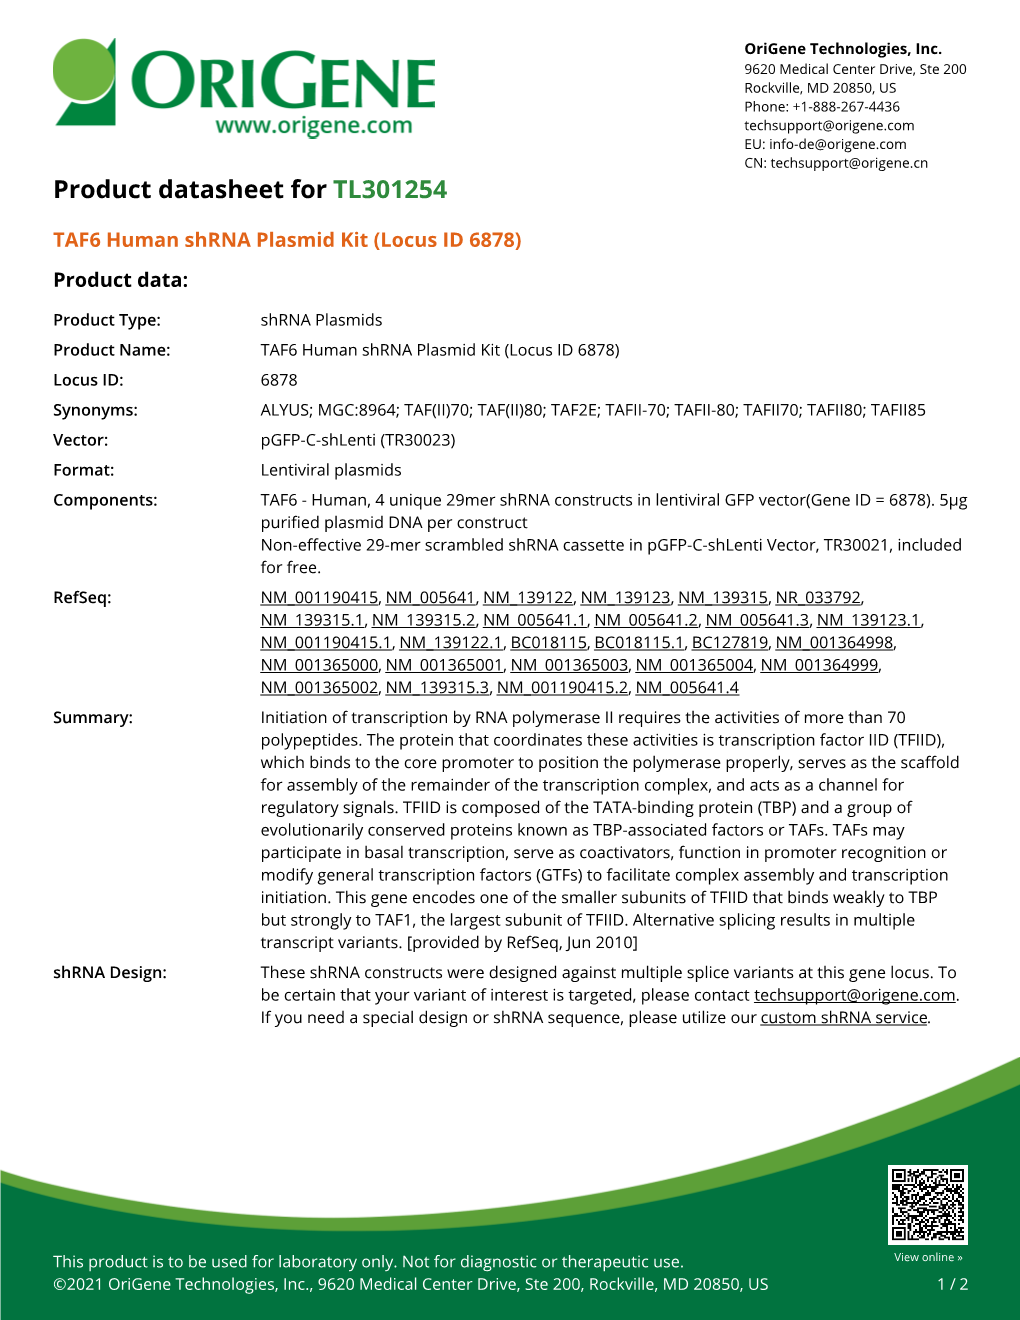 TAF6 Human Shrna Plasmid Kit (Locus ID 6878) Product Data